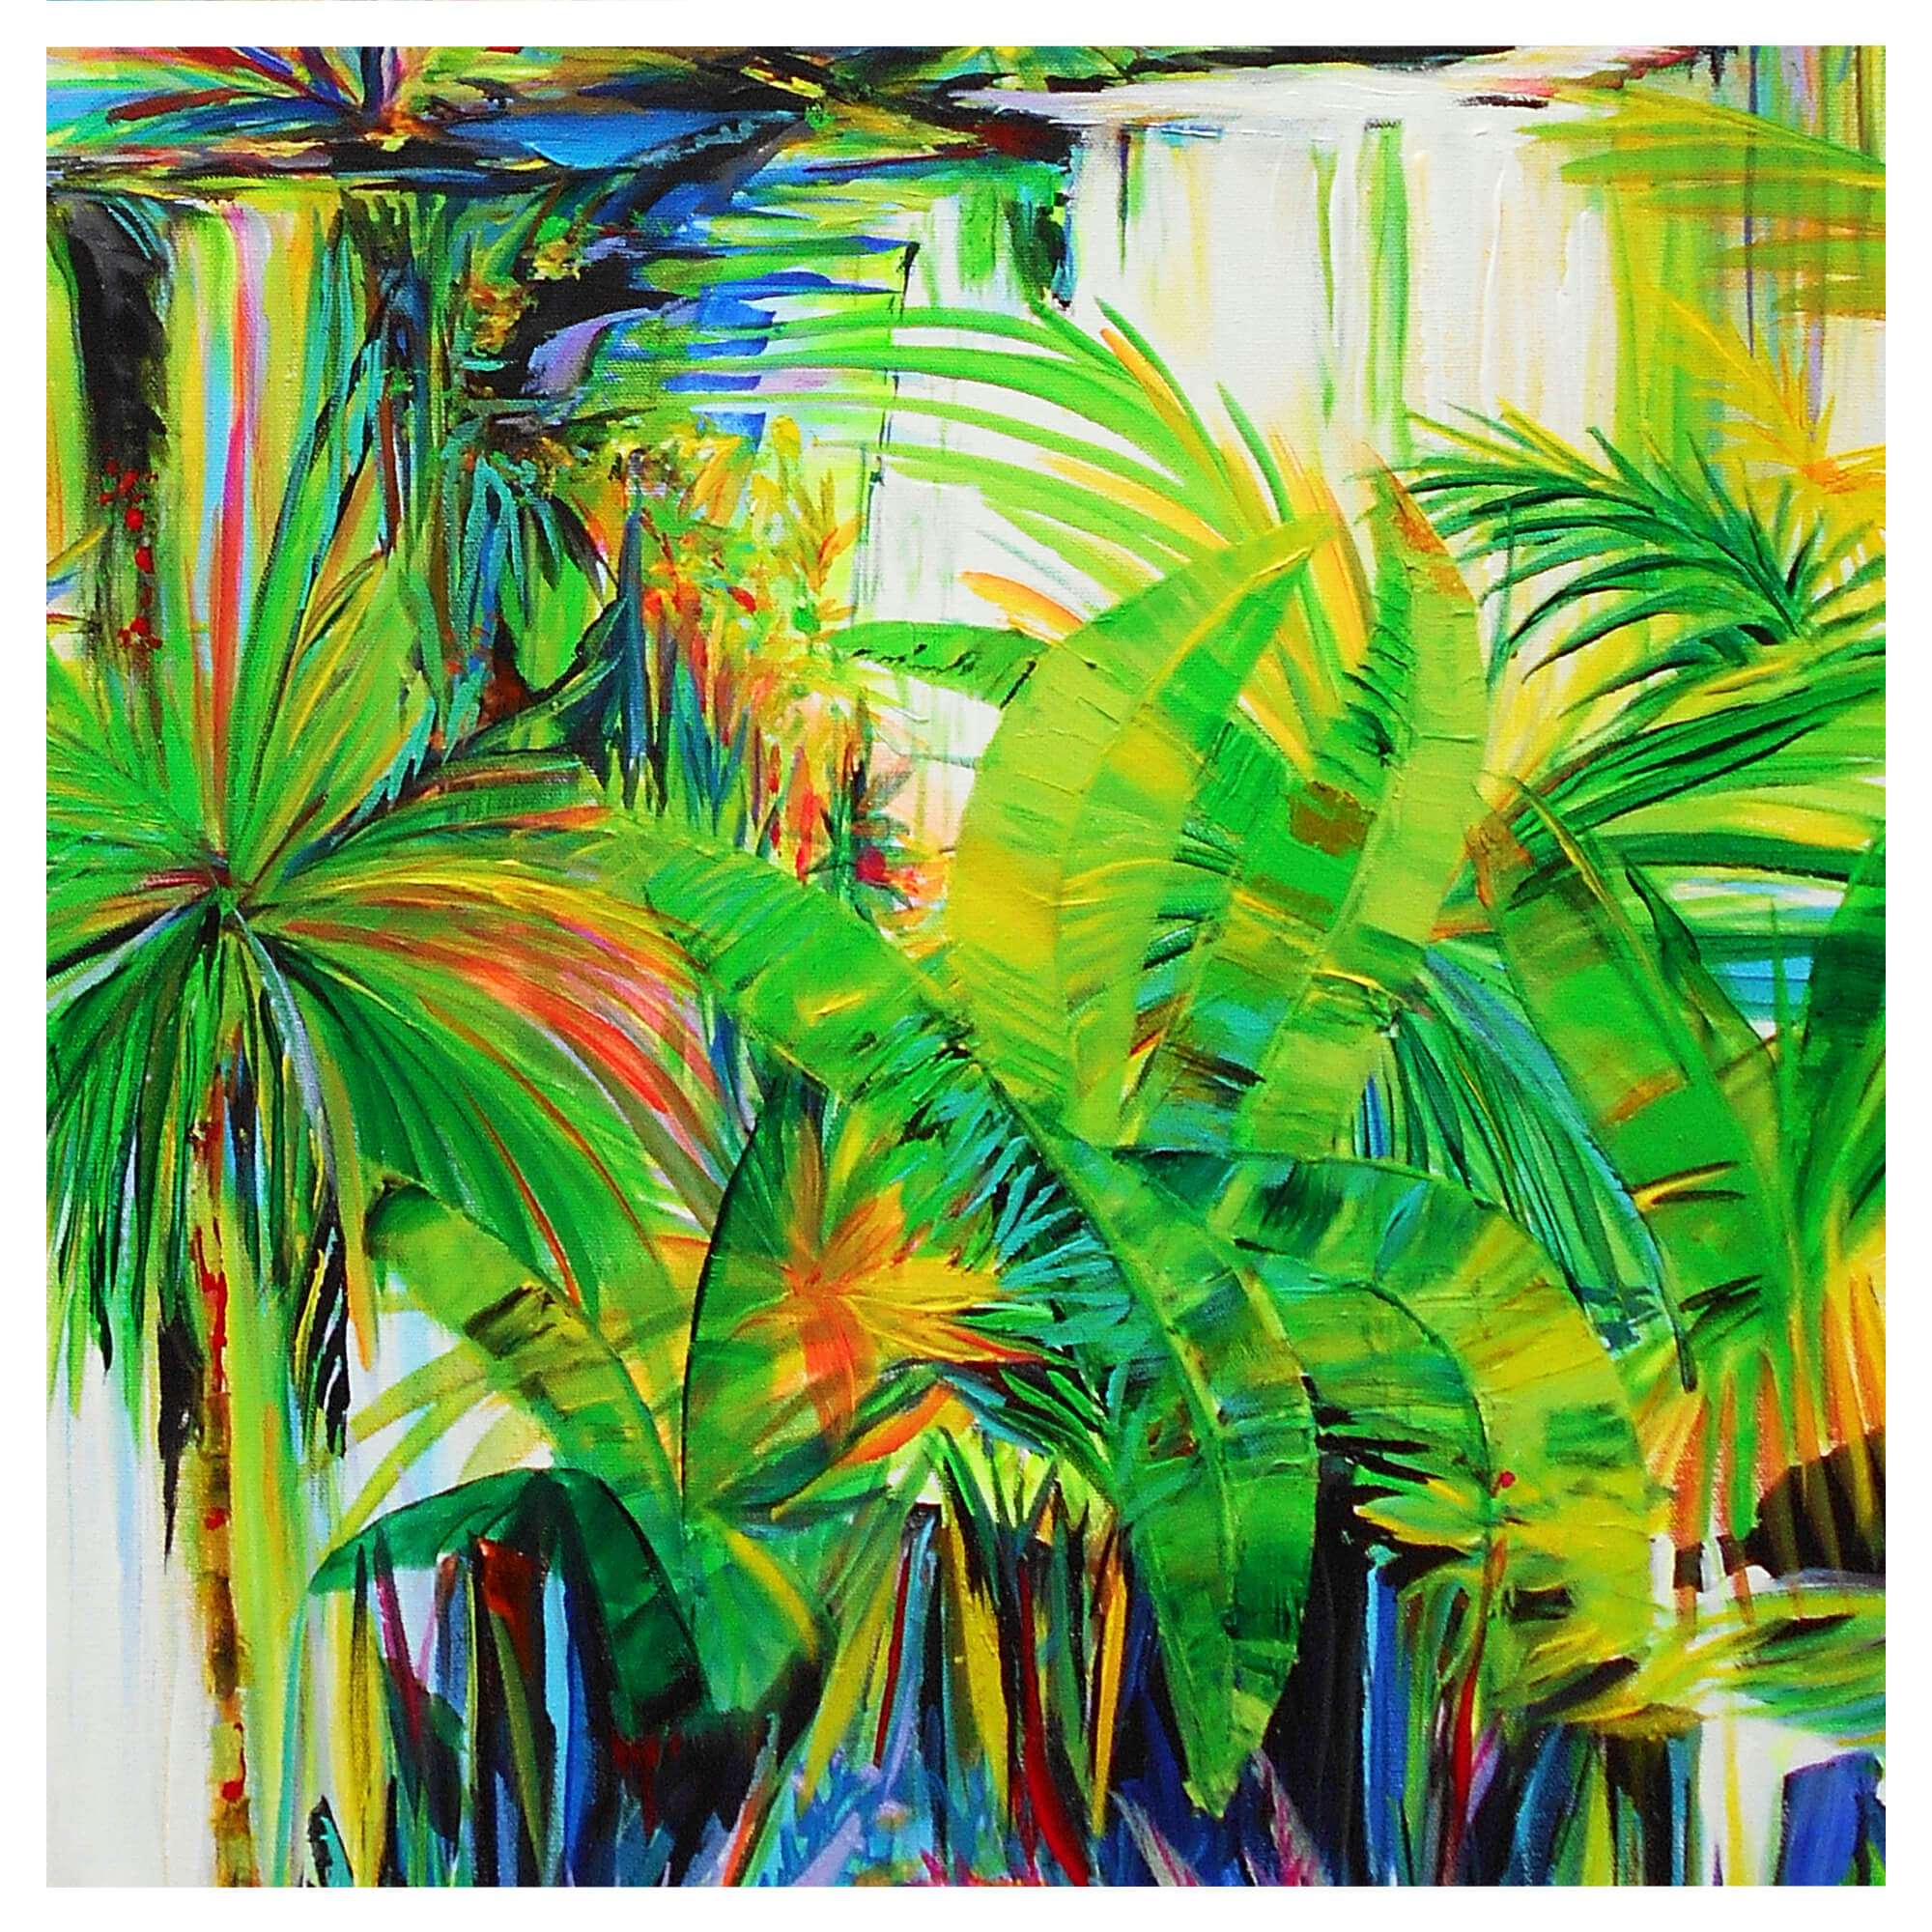 Colorful tropical plants by Hawaii artist Jess Burda